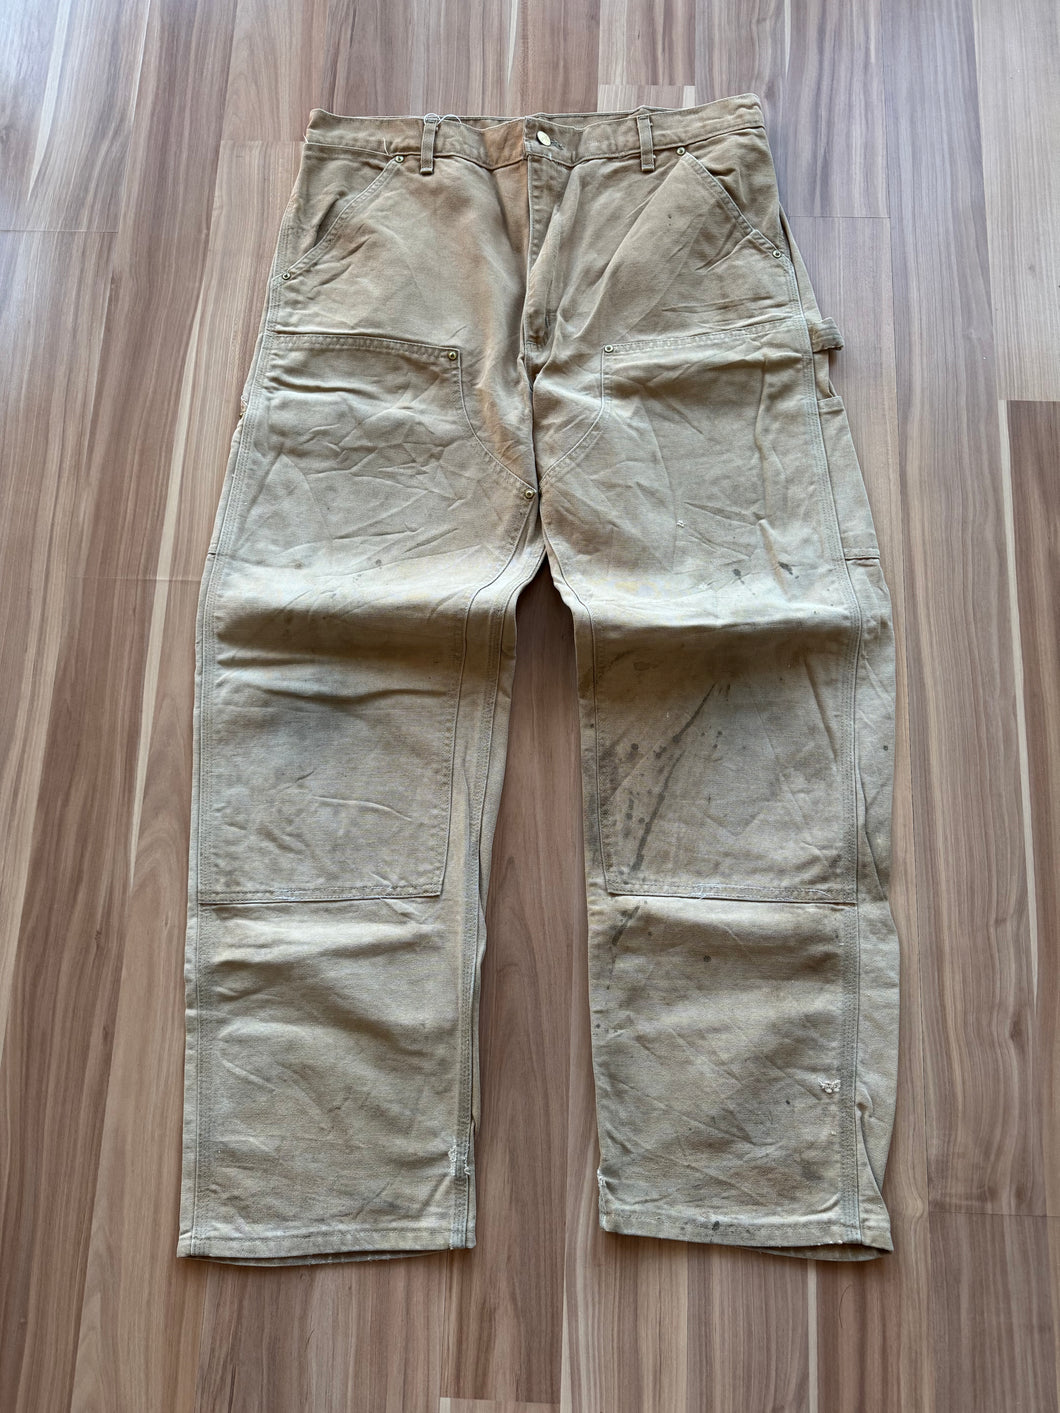 Carhartt Double Knees Pants - 36 x 32